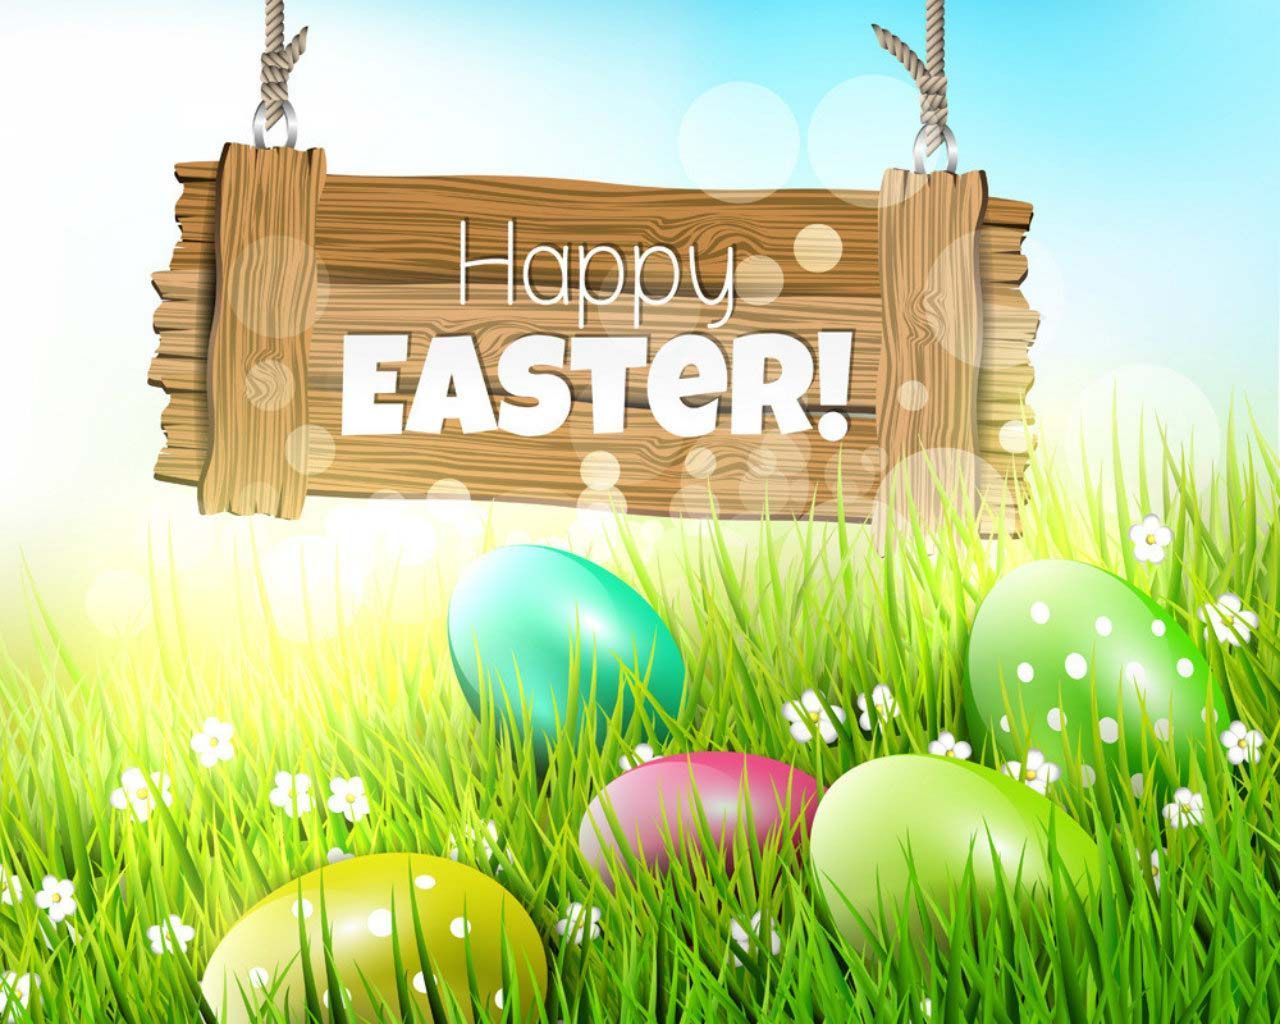 Happy Easter Free Wallpaper 1280x1024 PC Wallpaper. Easter wallpaper, Easter image, Happy easter picture